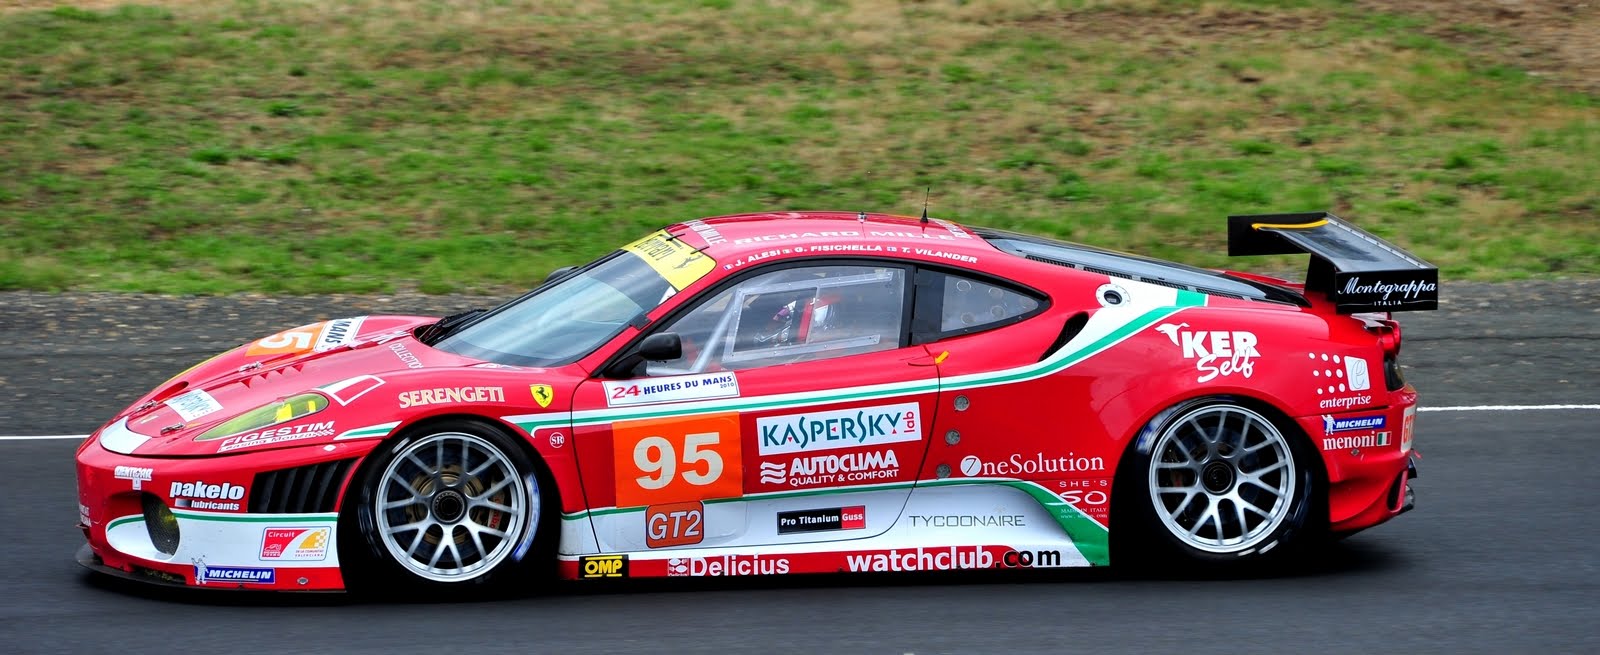 Ferrari+430+n95+-+Jean+Alesi+-+Watchclub.jpg